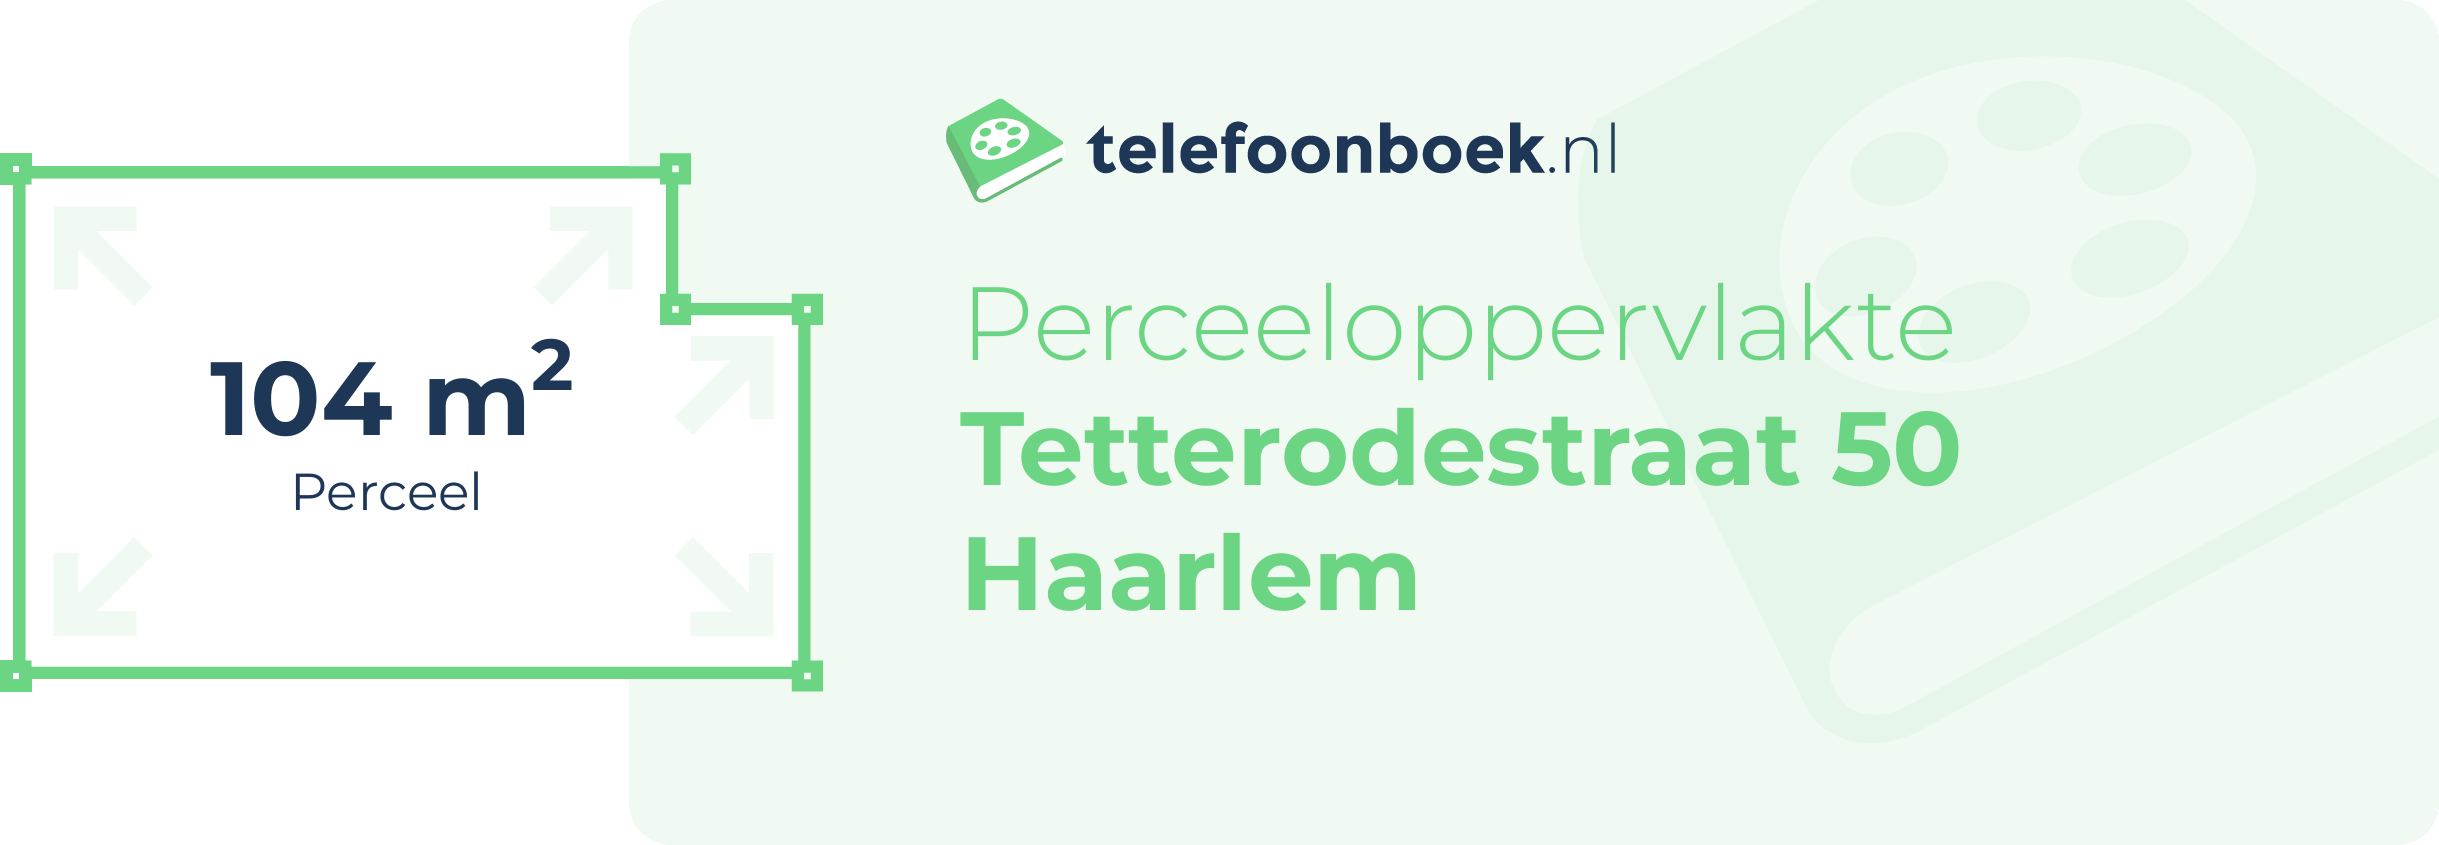 Perceeloppervlakte Tetterodestraat 50 Haarlem